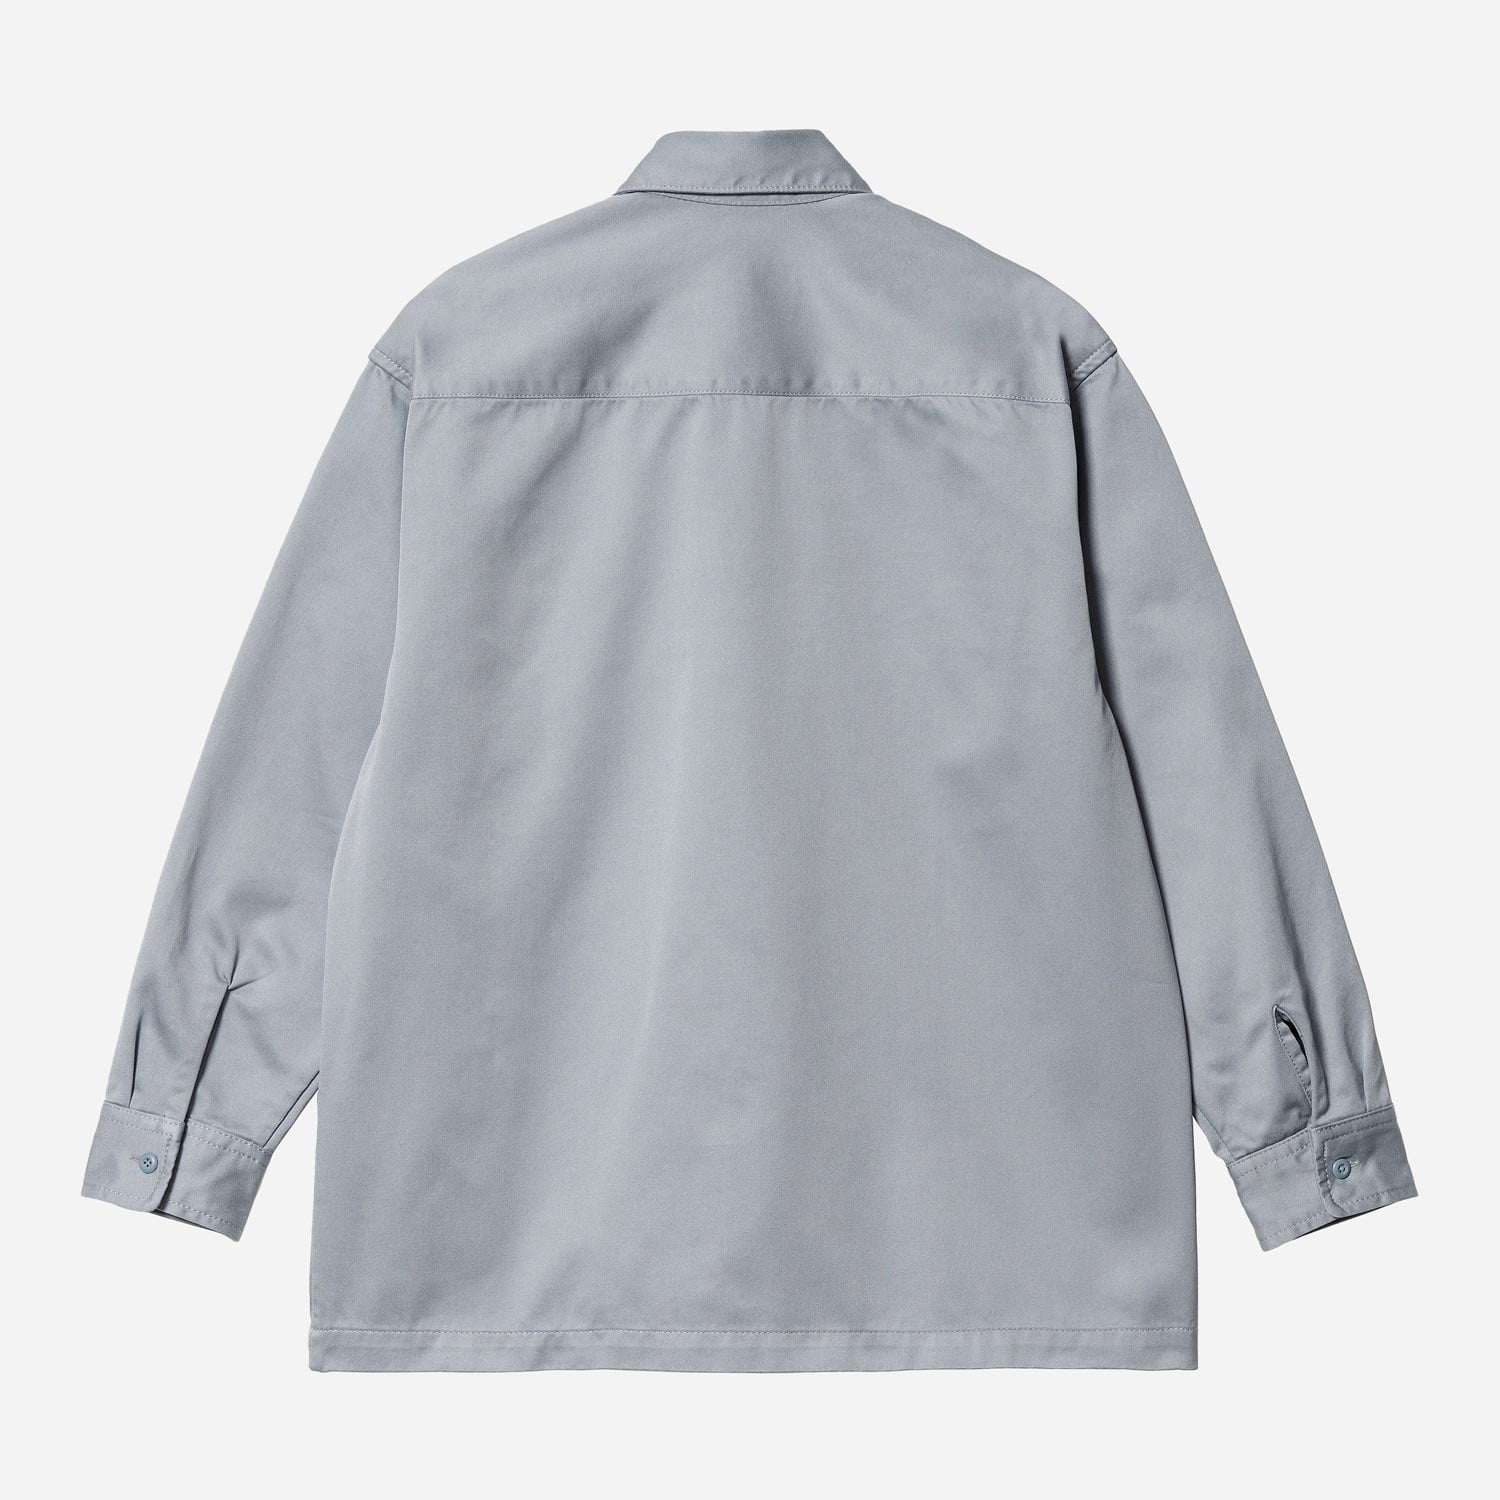 Carhartt WIP Women's Craft Loose Fit Long Sleeve Shirt - Mirror Rinsed